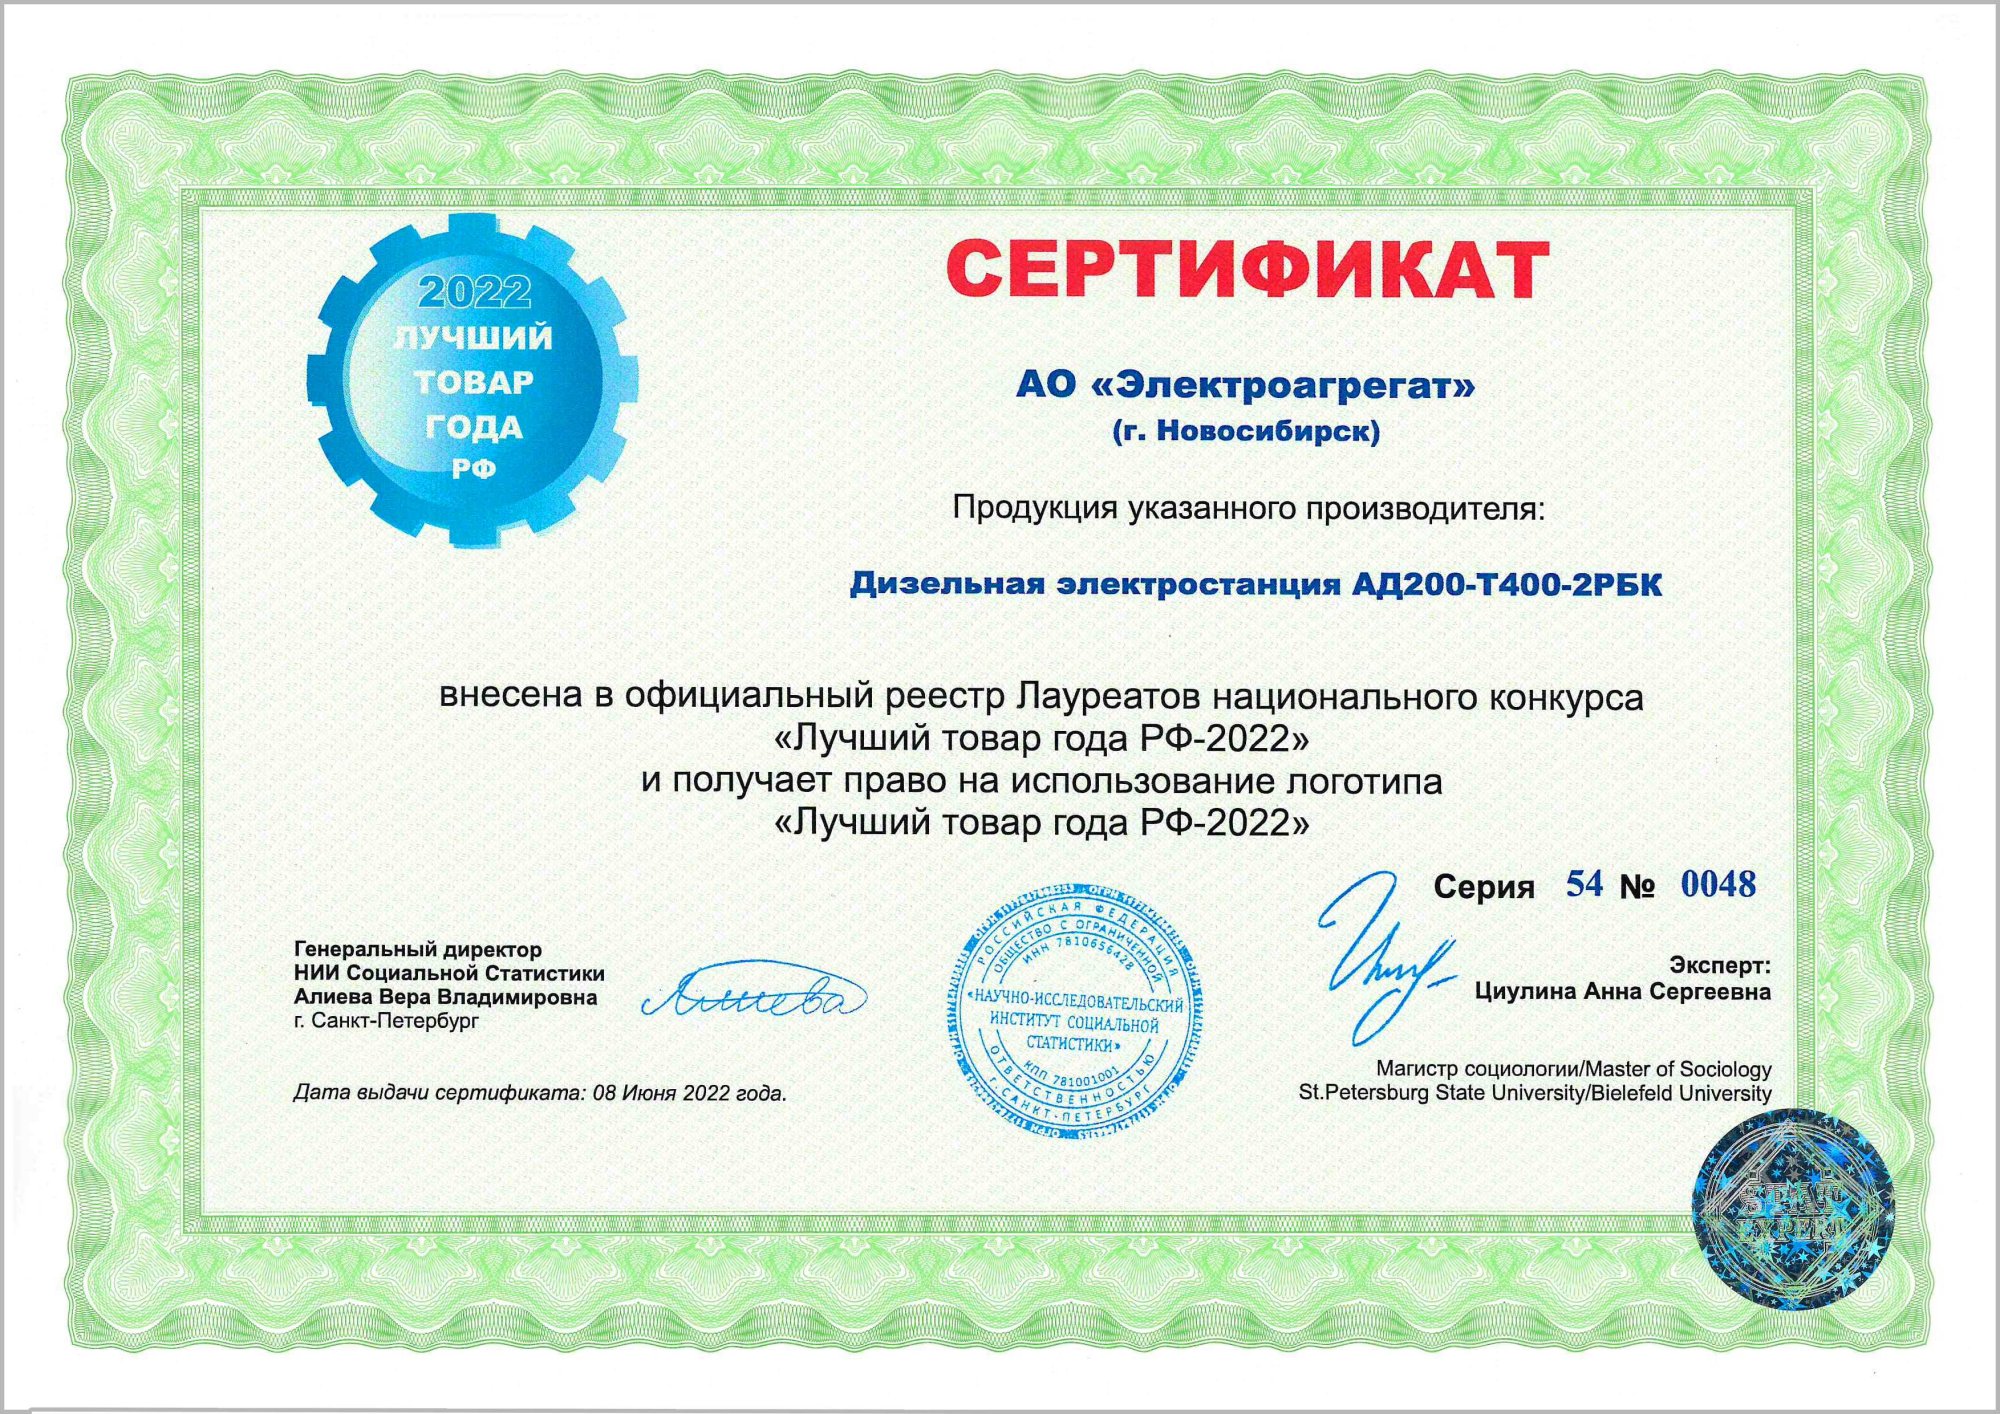 Сертификат АО Электроагрегат на ДГУ АД200-Т400-2РБК. Лучший товар года 2022